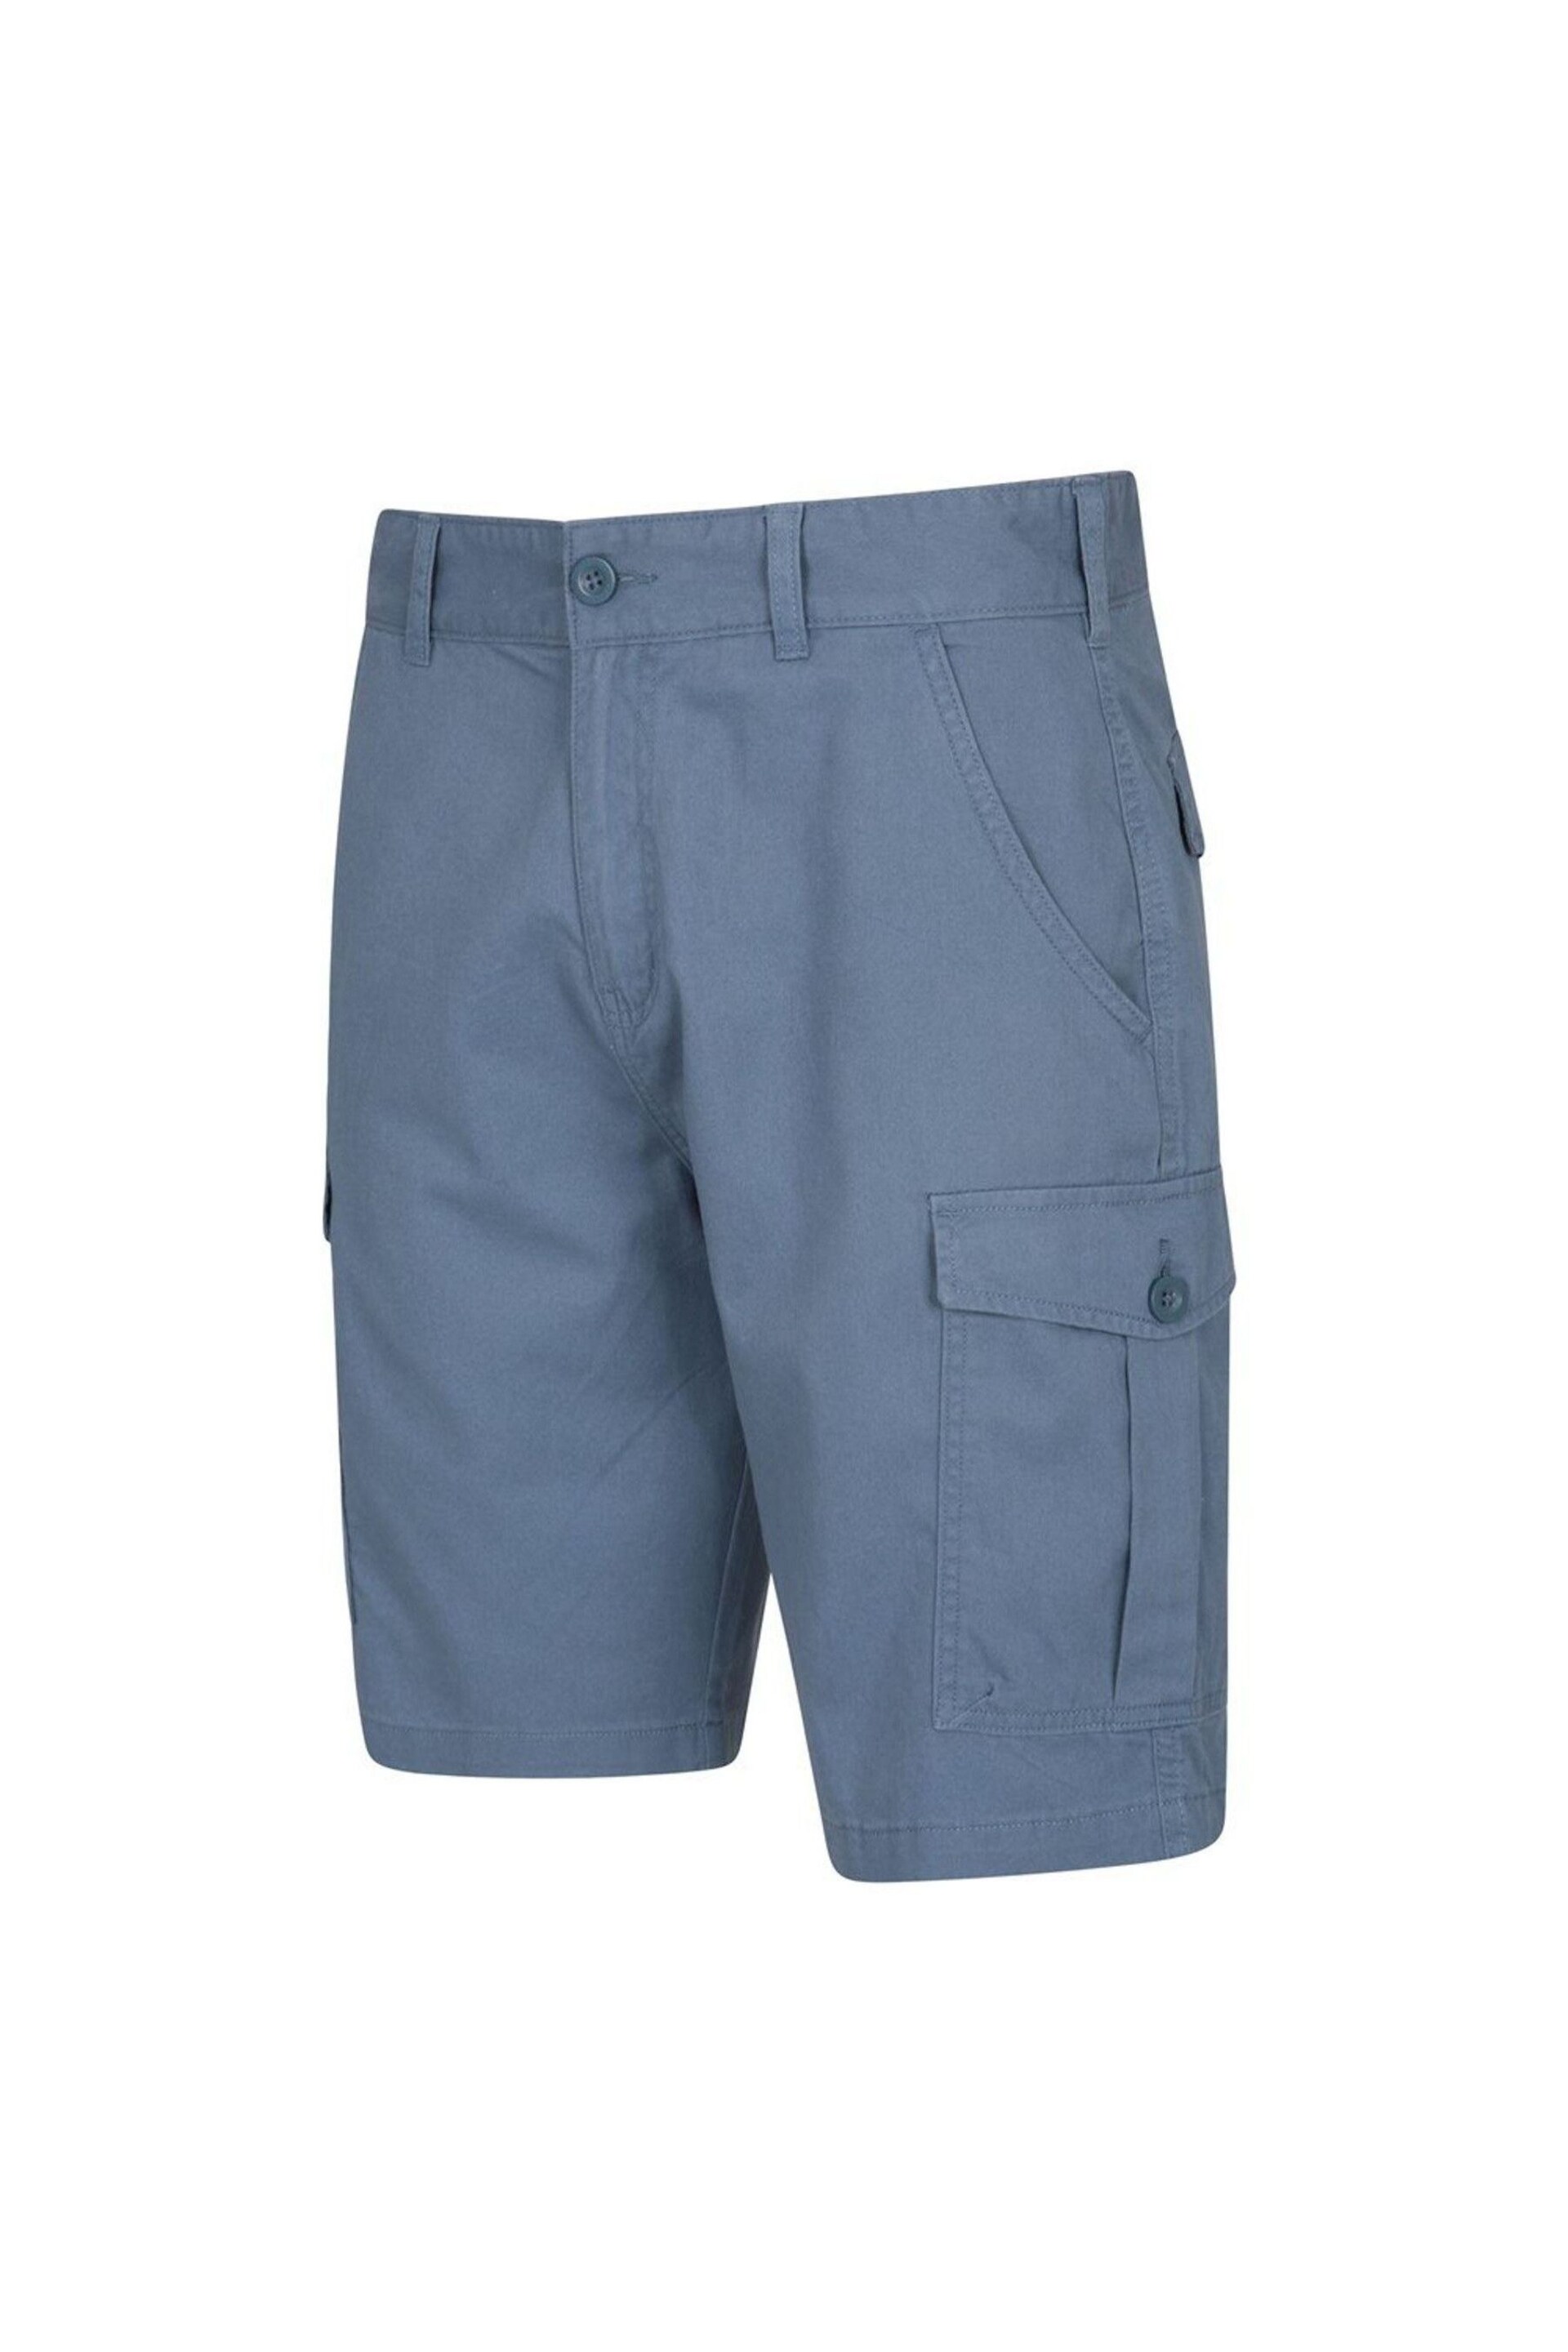 Mountain Warehouse Blue Lakeside Mens Cargo Shorts - Image 2 of 4